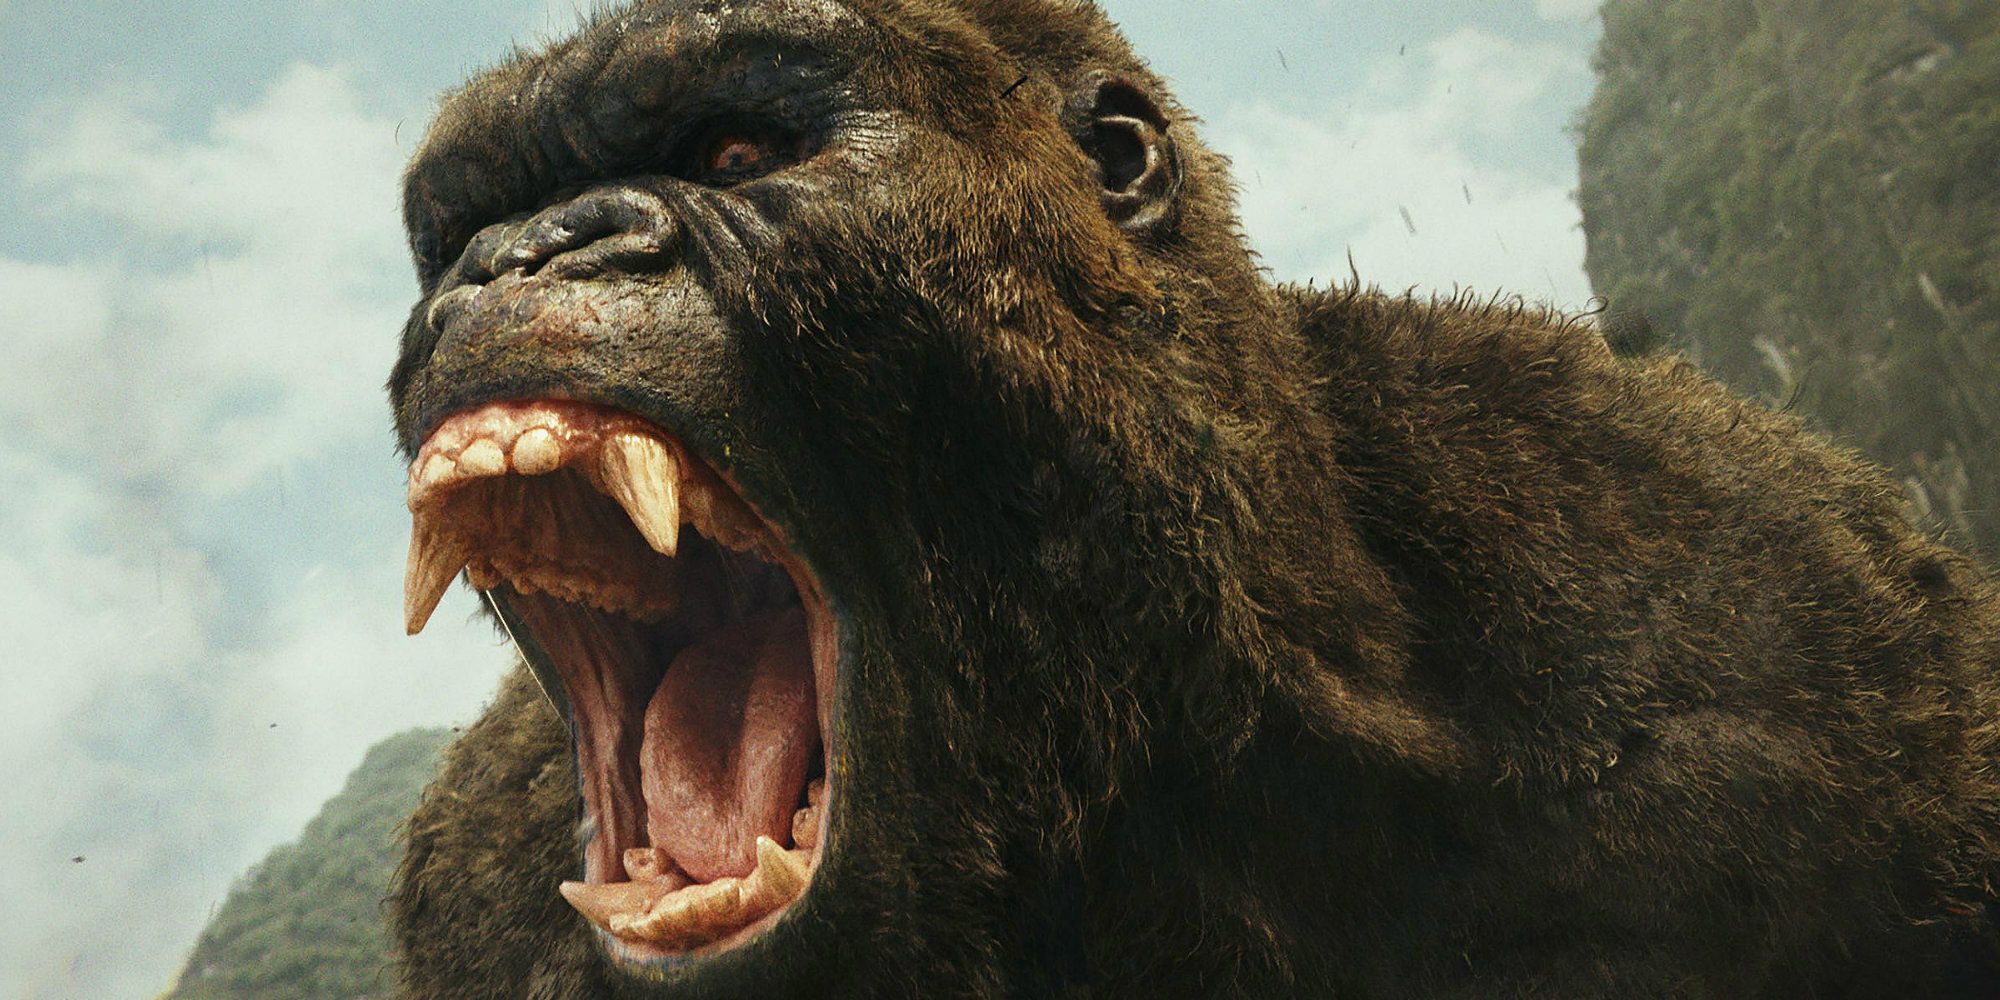 Kong: Skull Island - King Kong roars